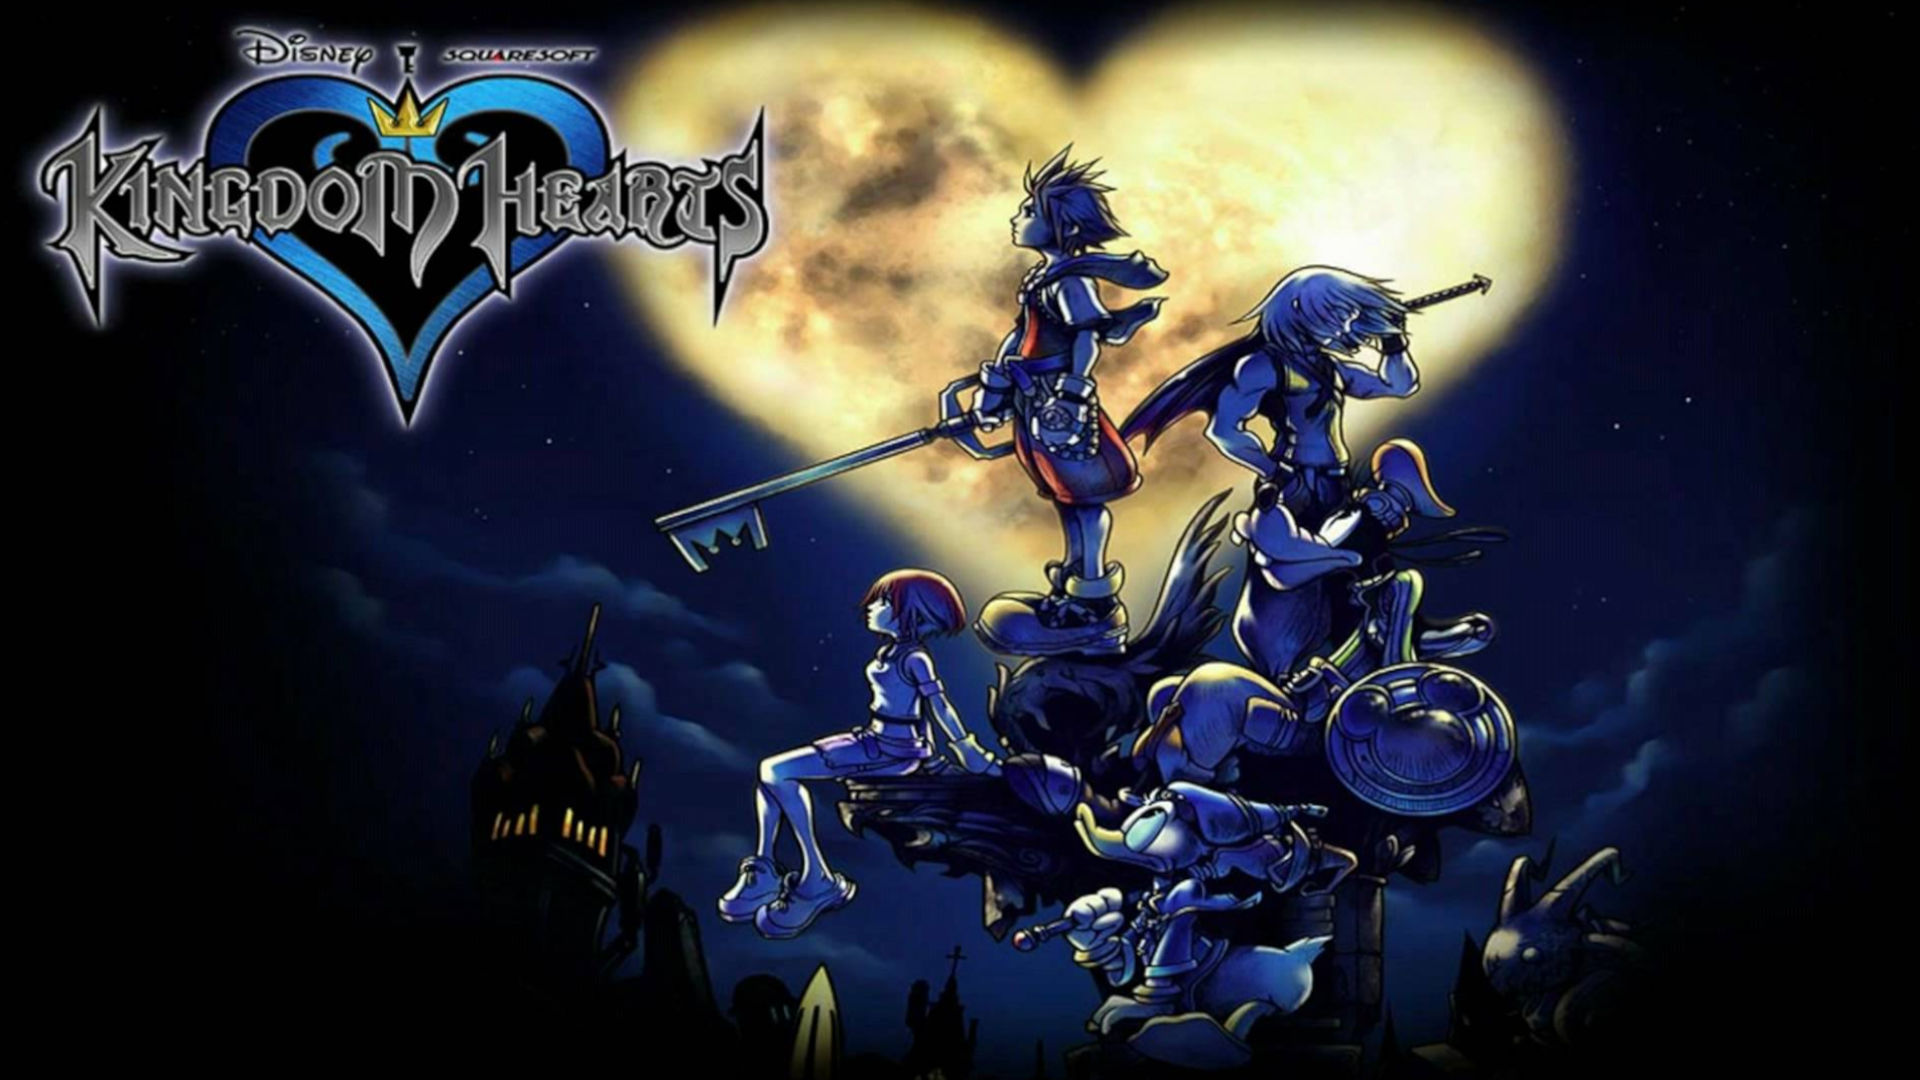 Kingdom Hearts (video game) - Kingdom Hearts Wiki, the Kingdom Hearts encyclopedia - wide 7